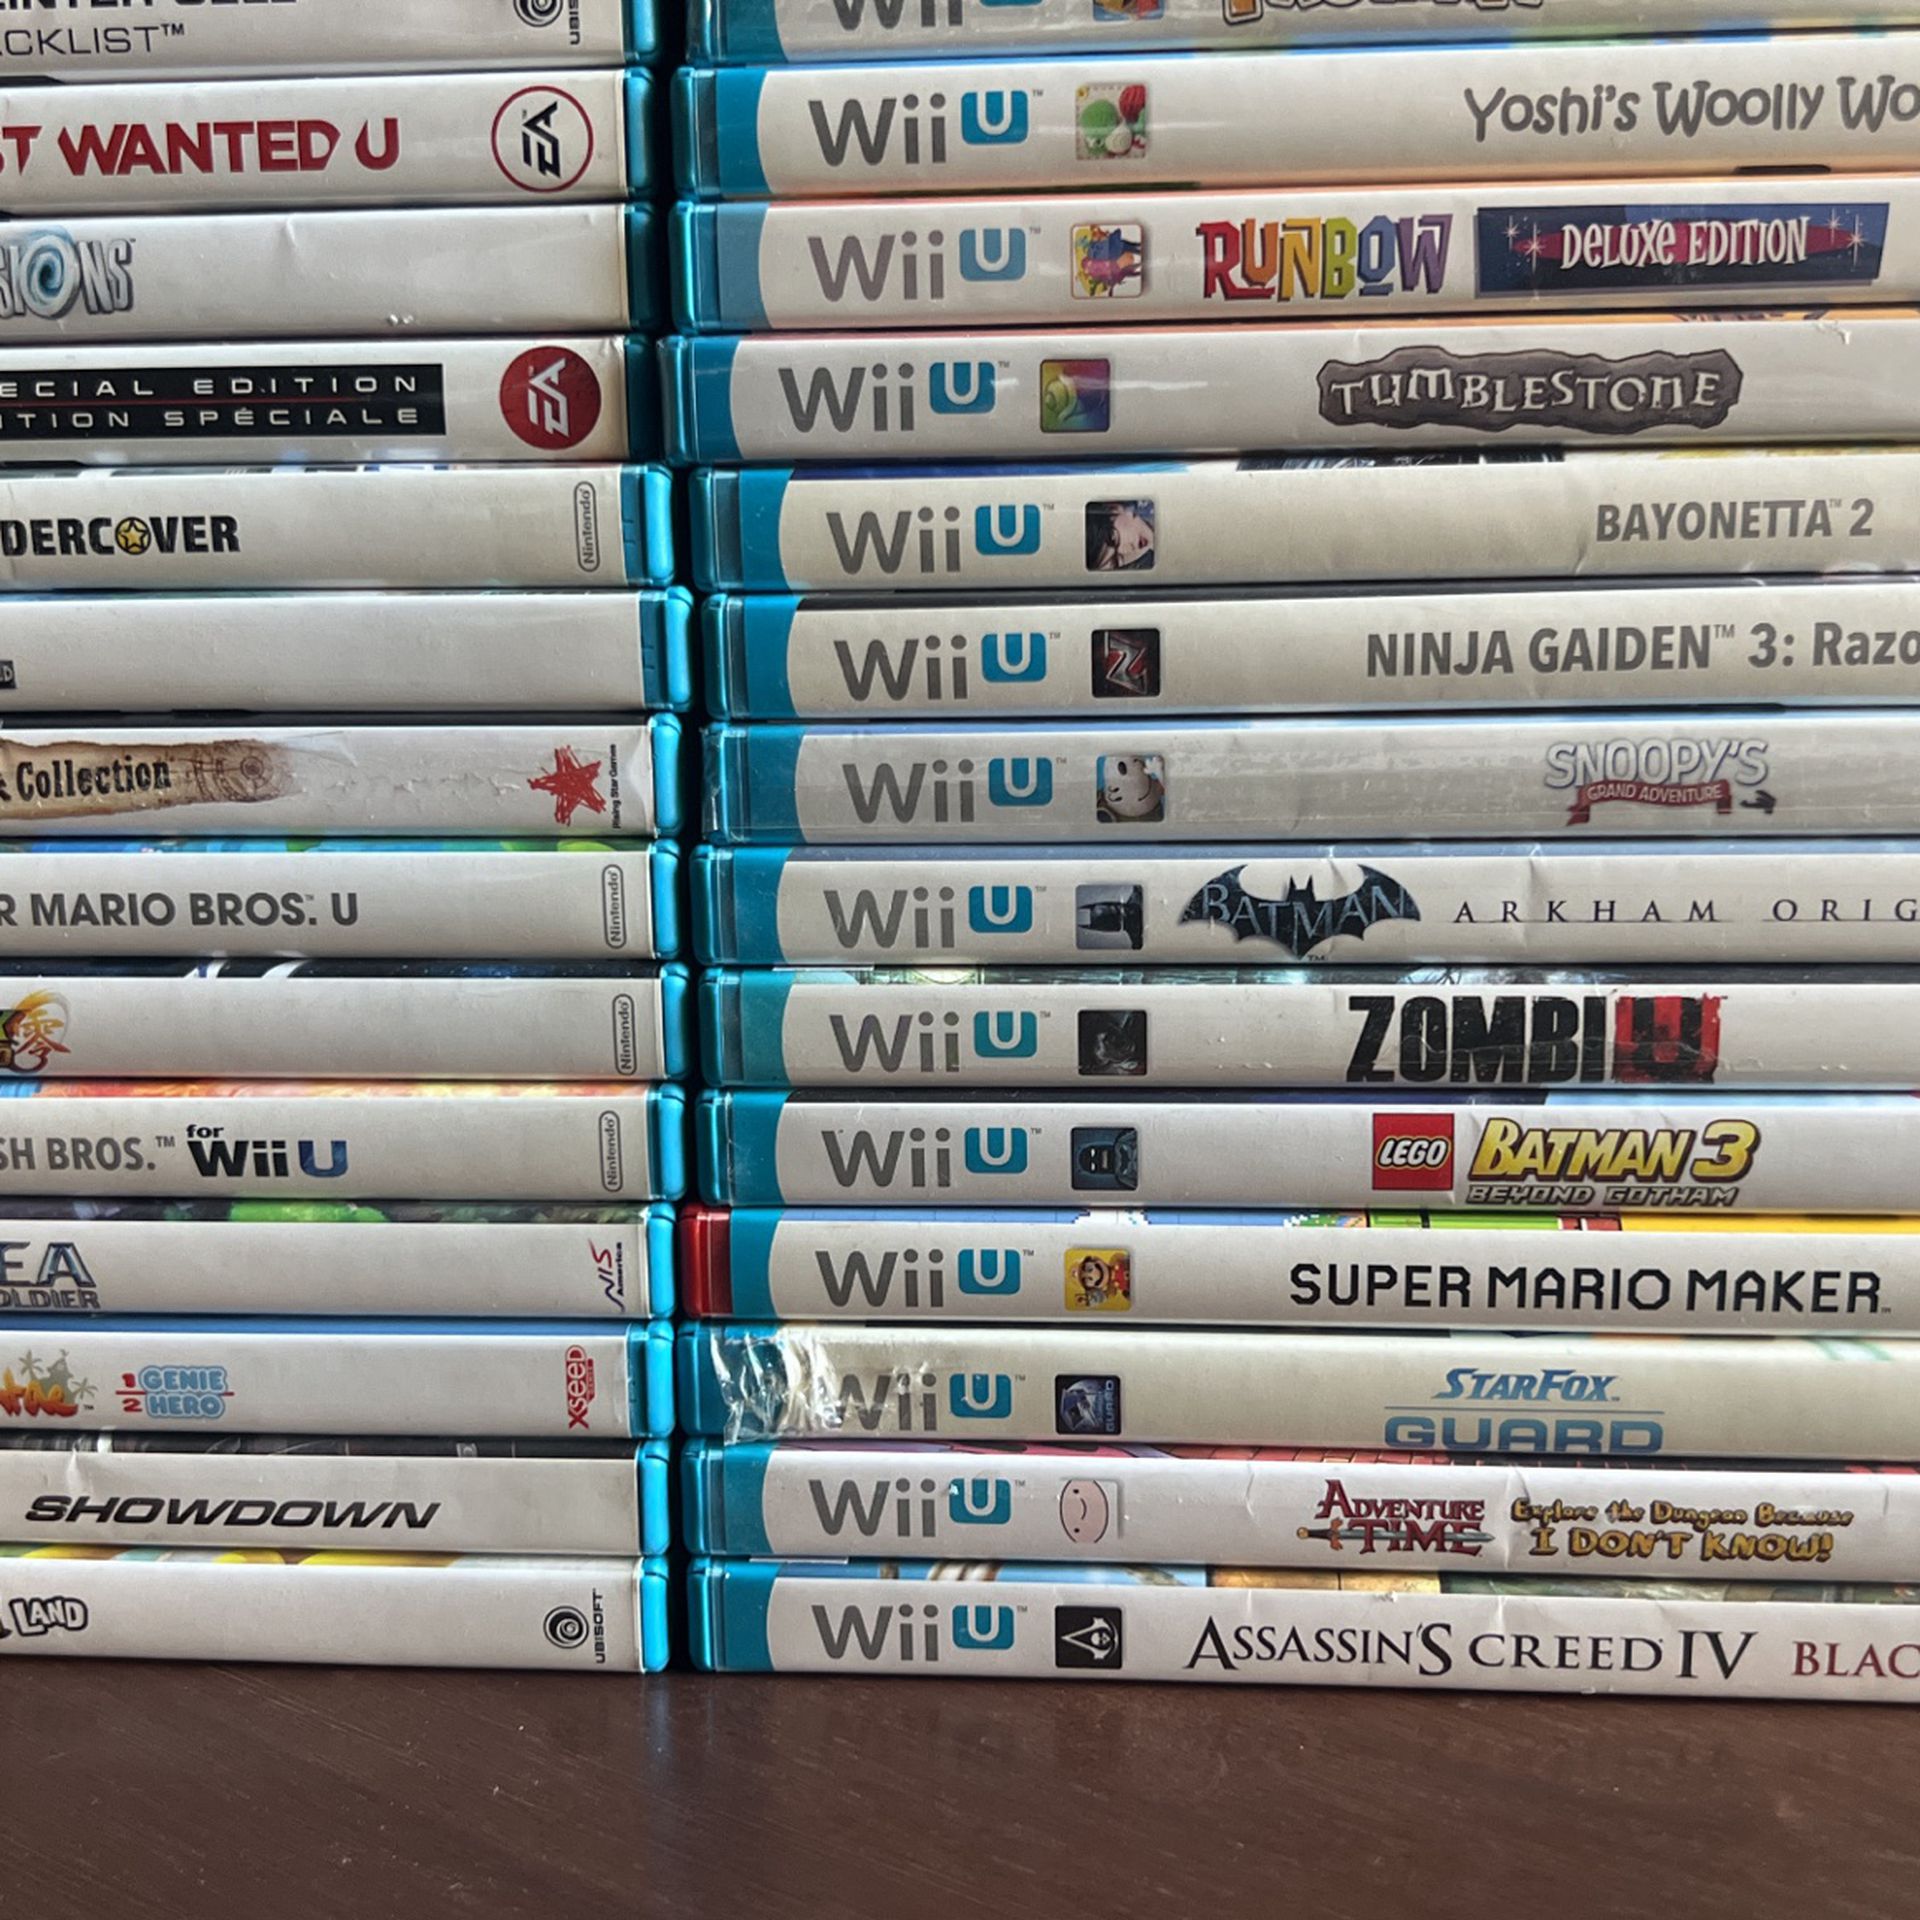 The Legend Of Zelda Breath Of The Wild Wii U New Sealed for Sale in  Turlock, CA - OfferUp